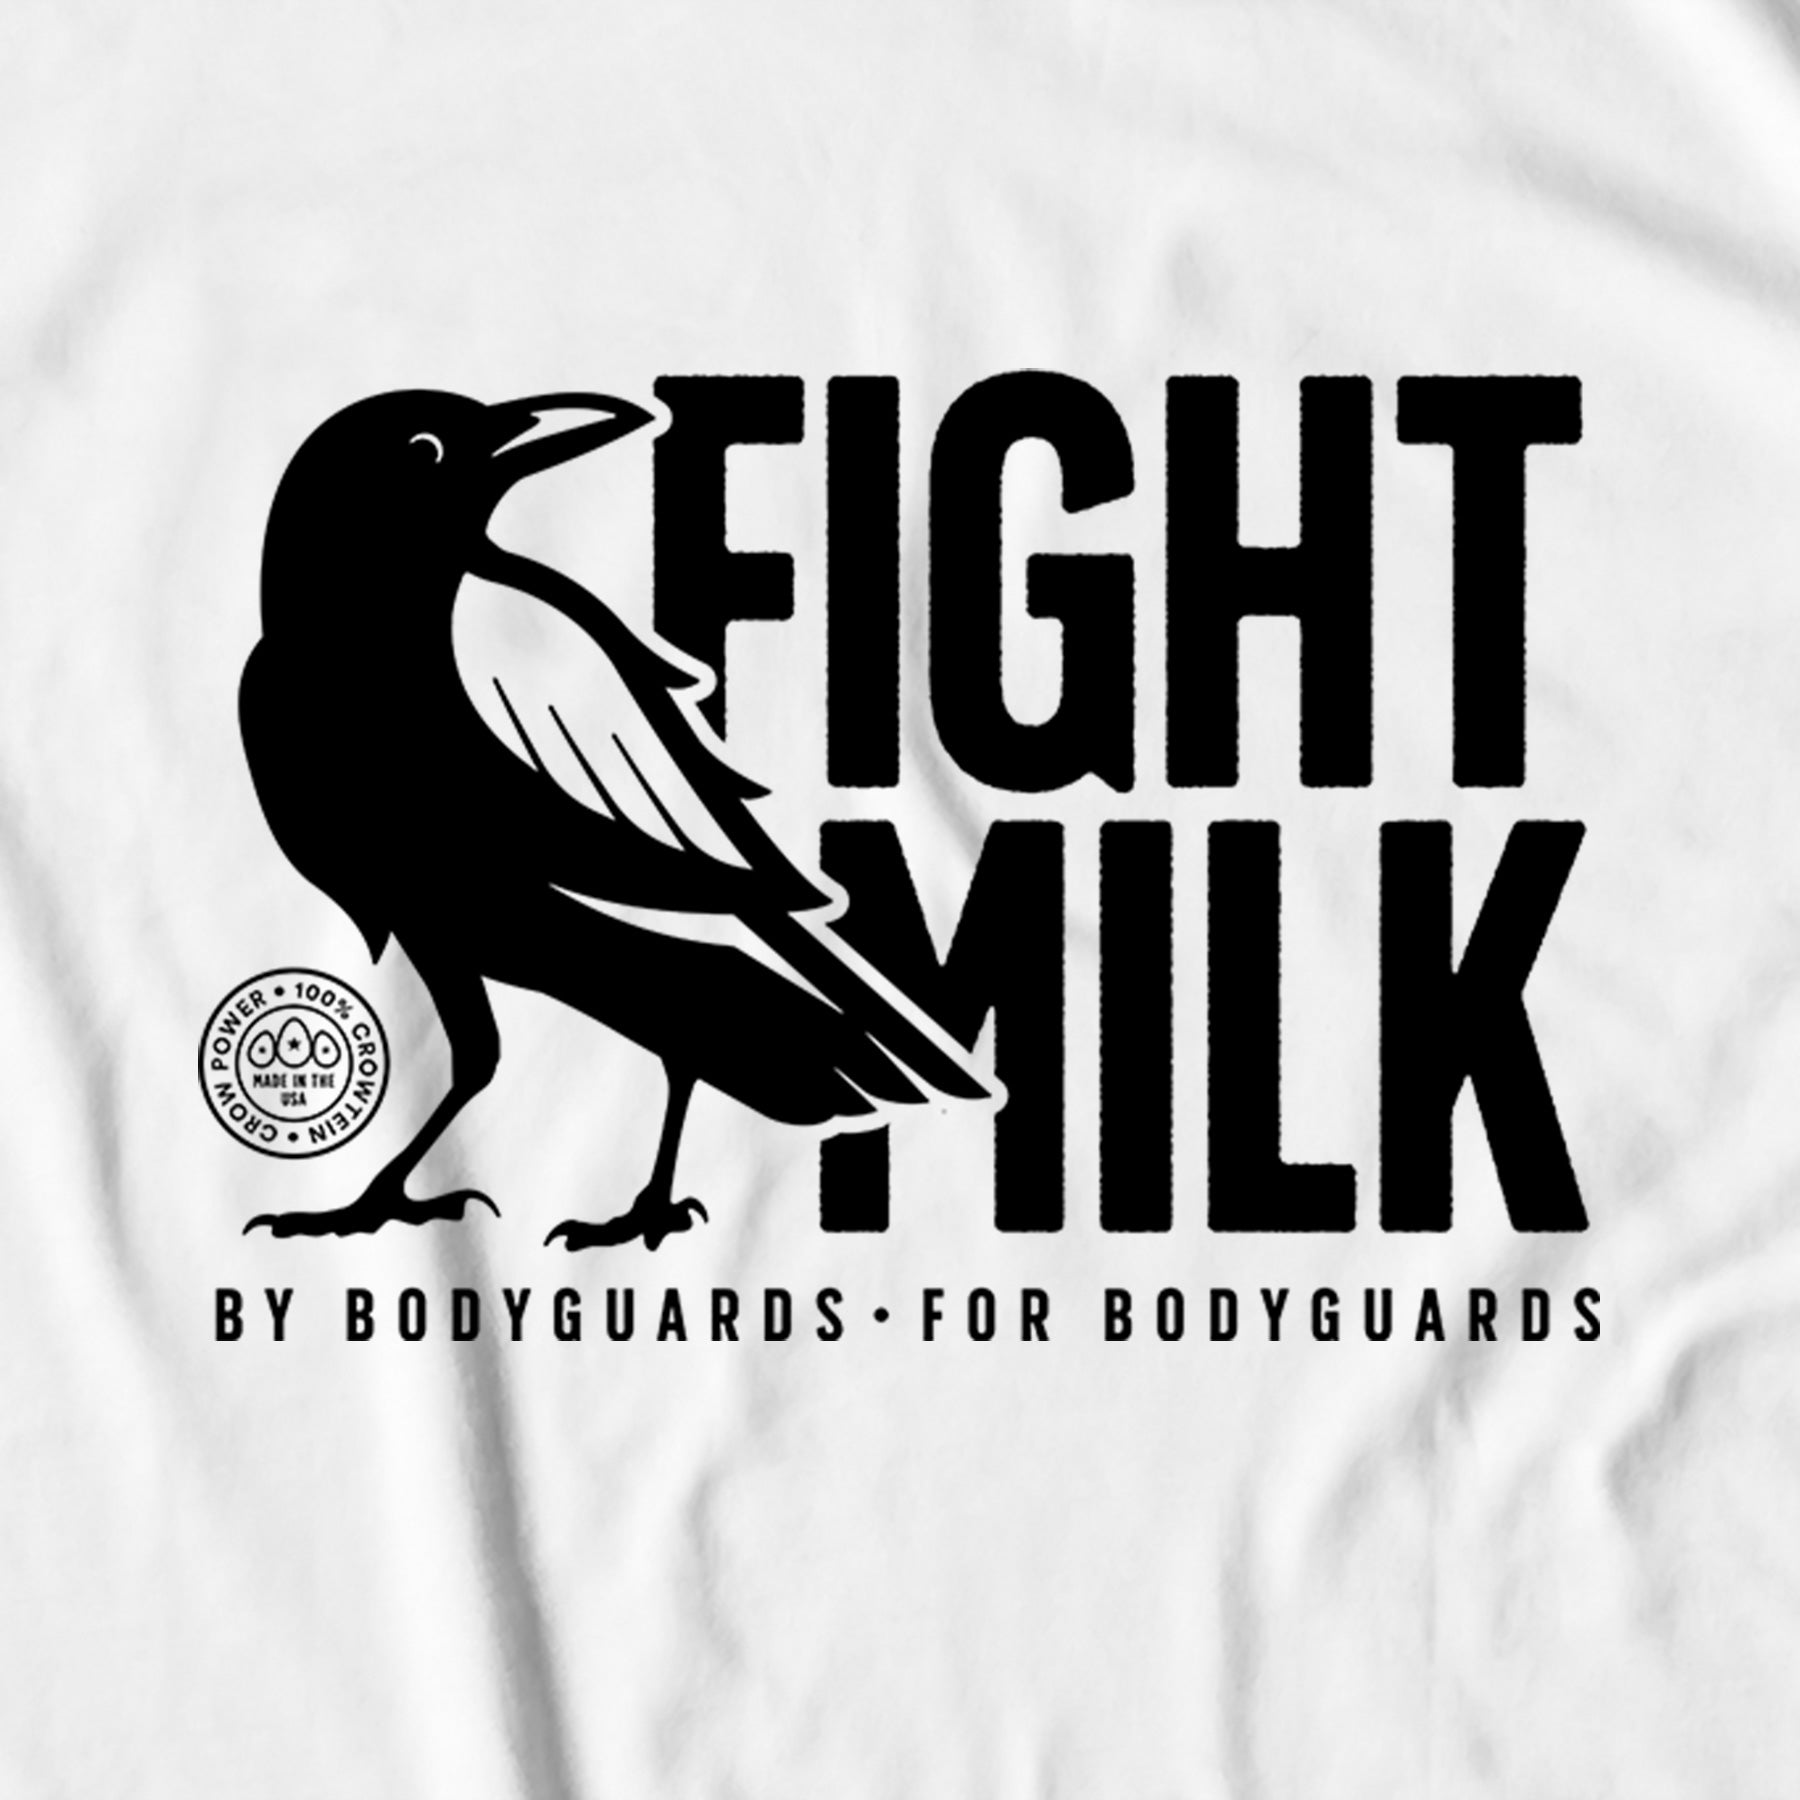 Fight Milk BBFB T-Shirt - White